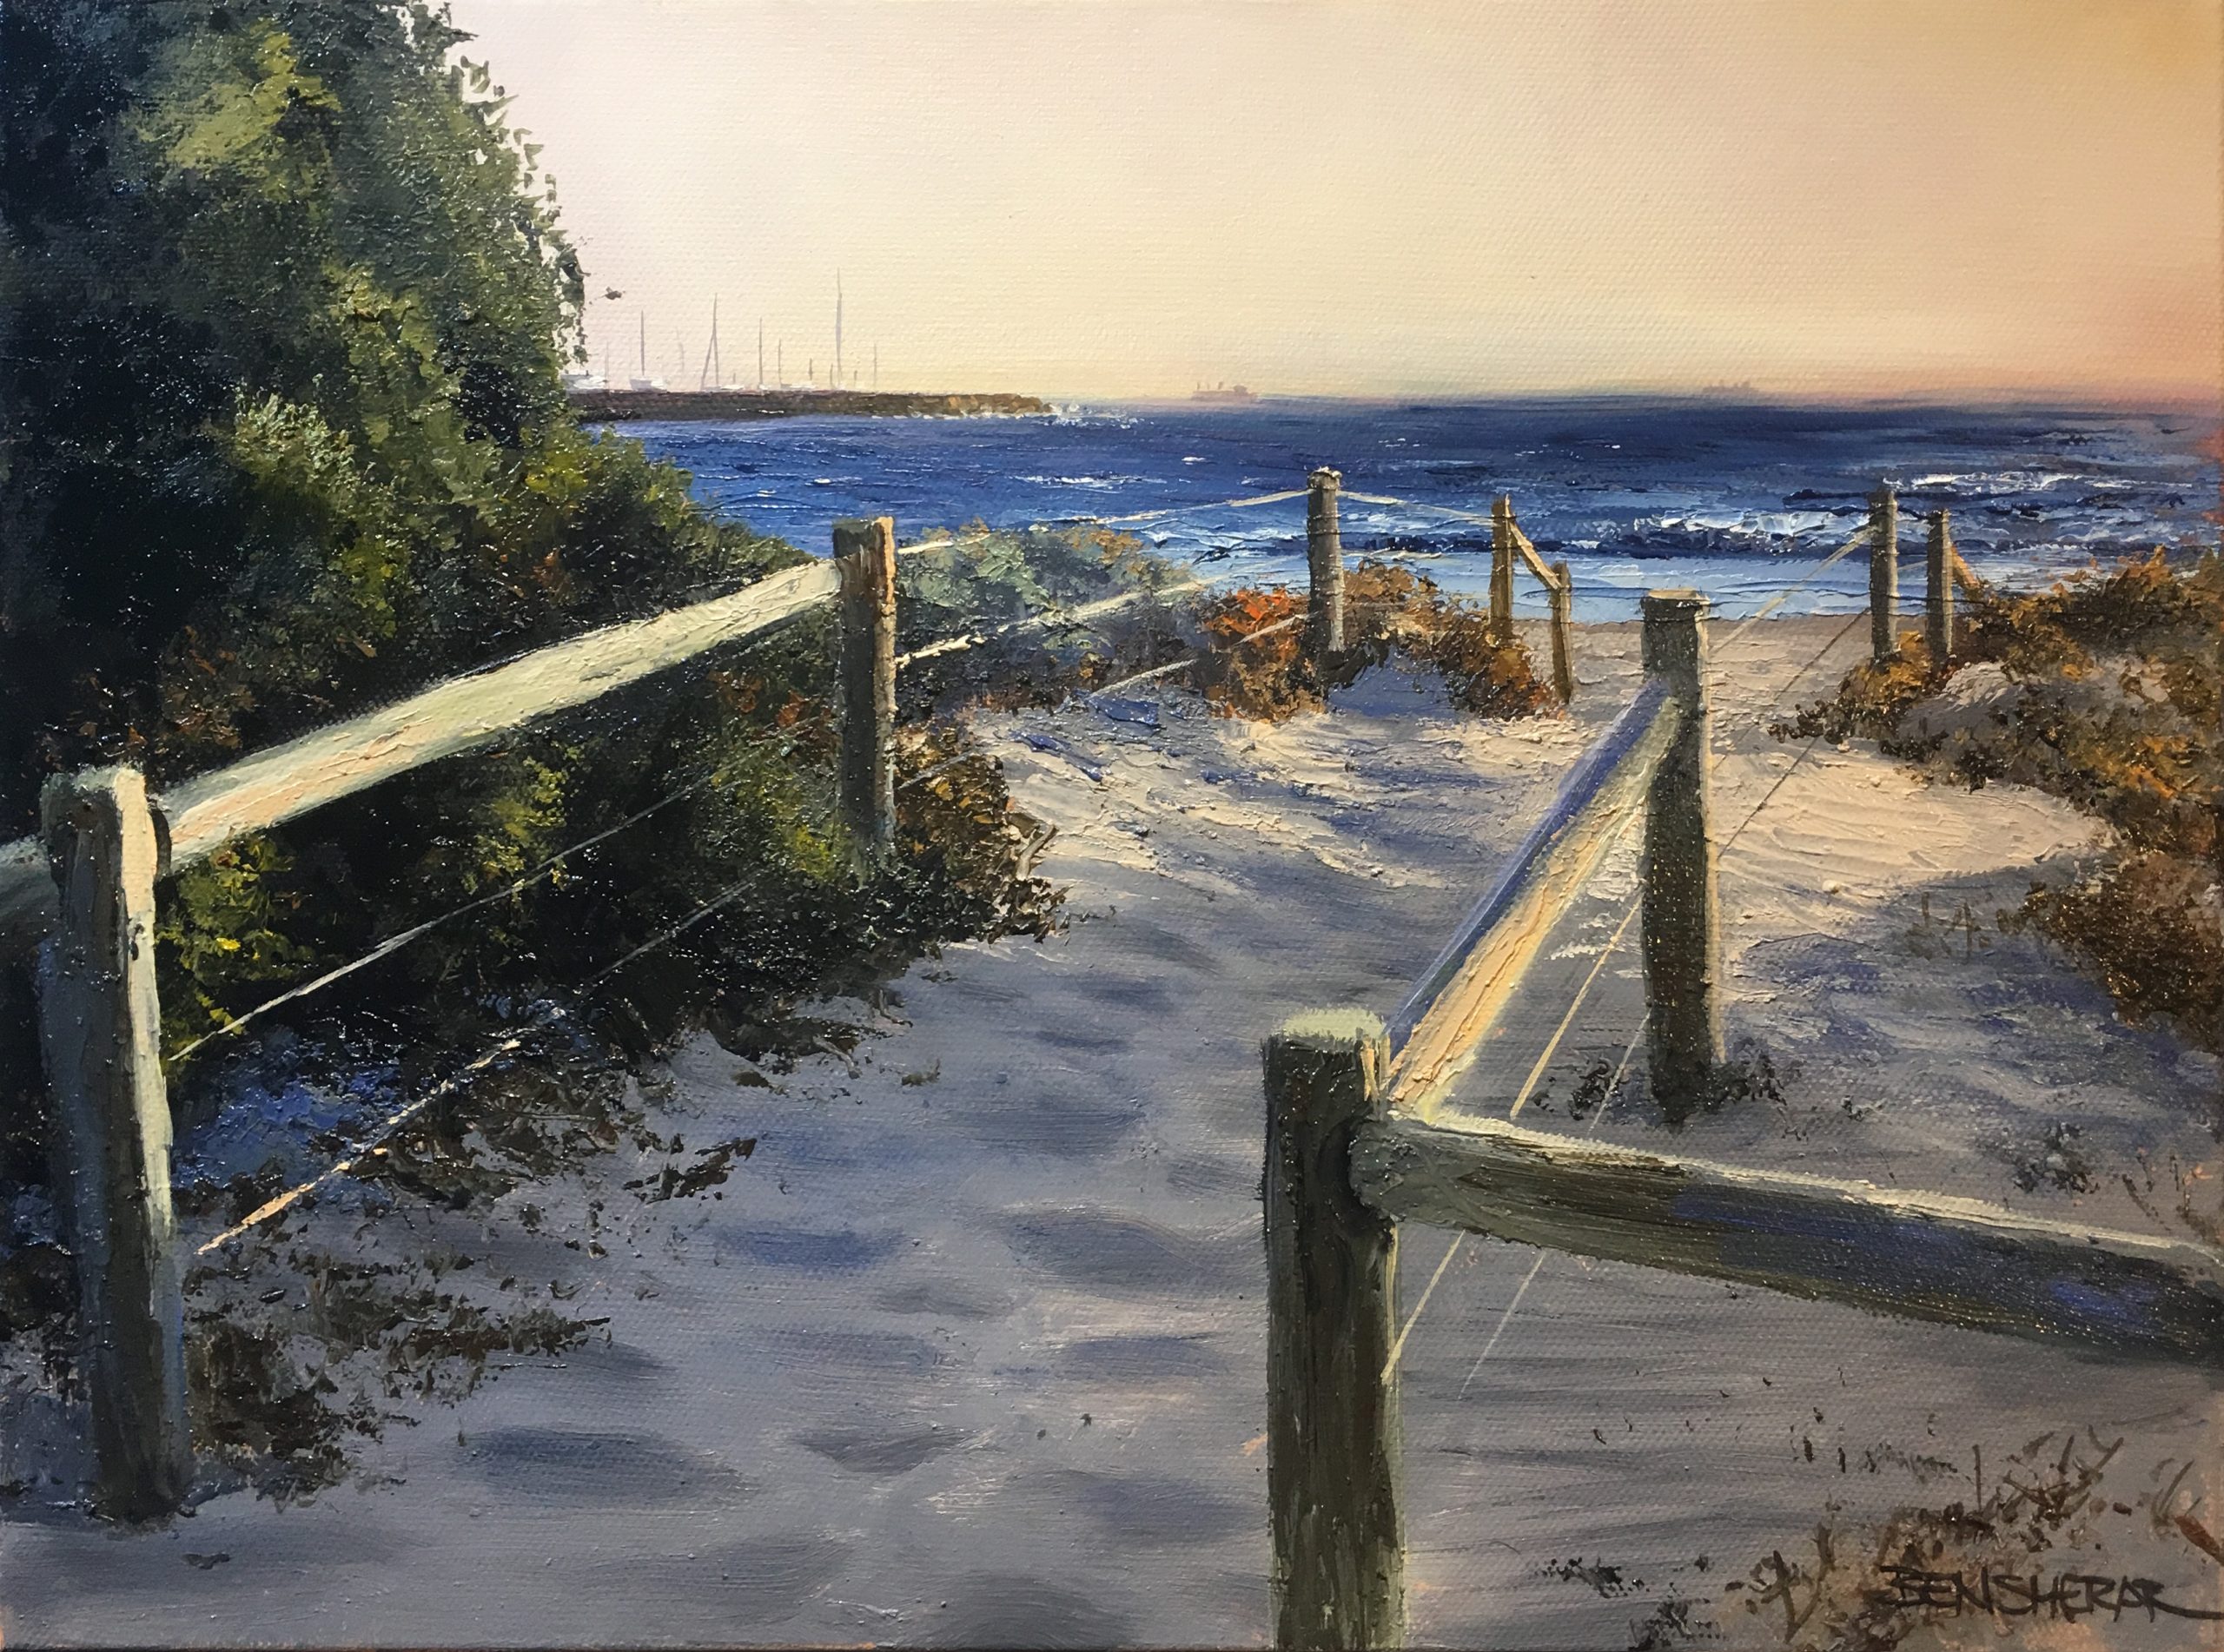 An original oil painting by artists Ben SHerar of Bathers beach in Fremantle Western Australia